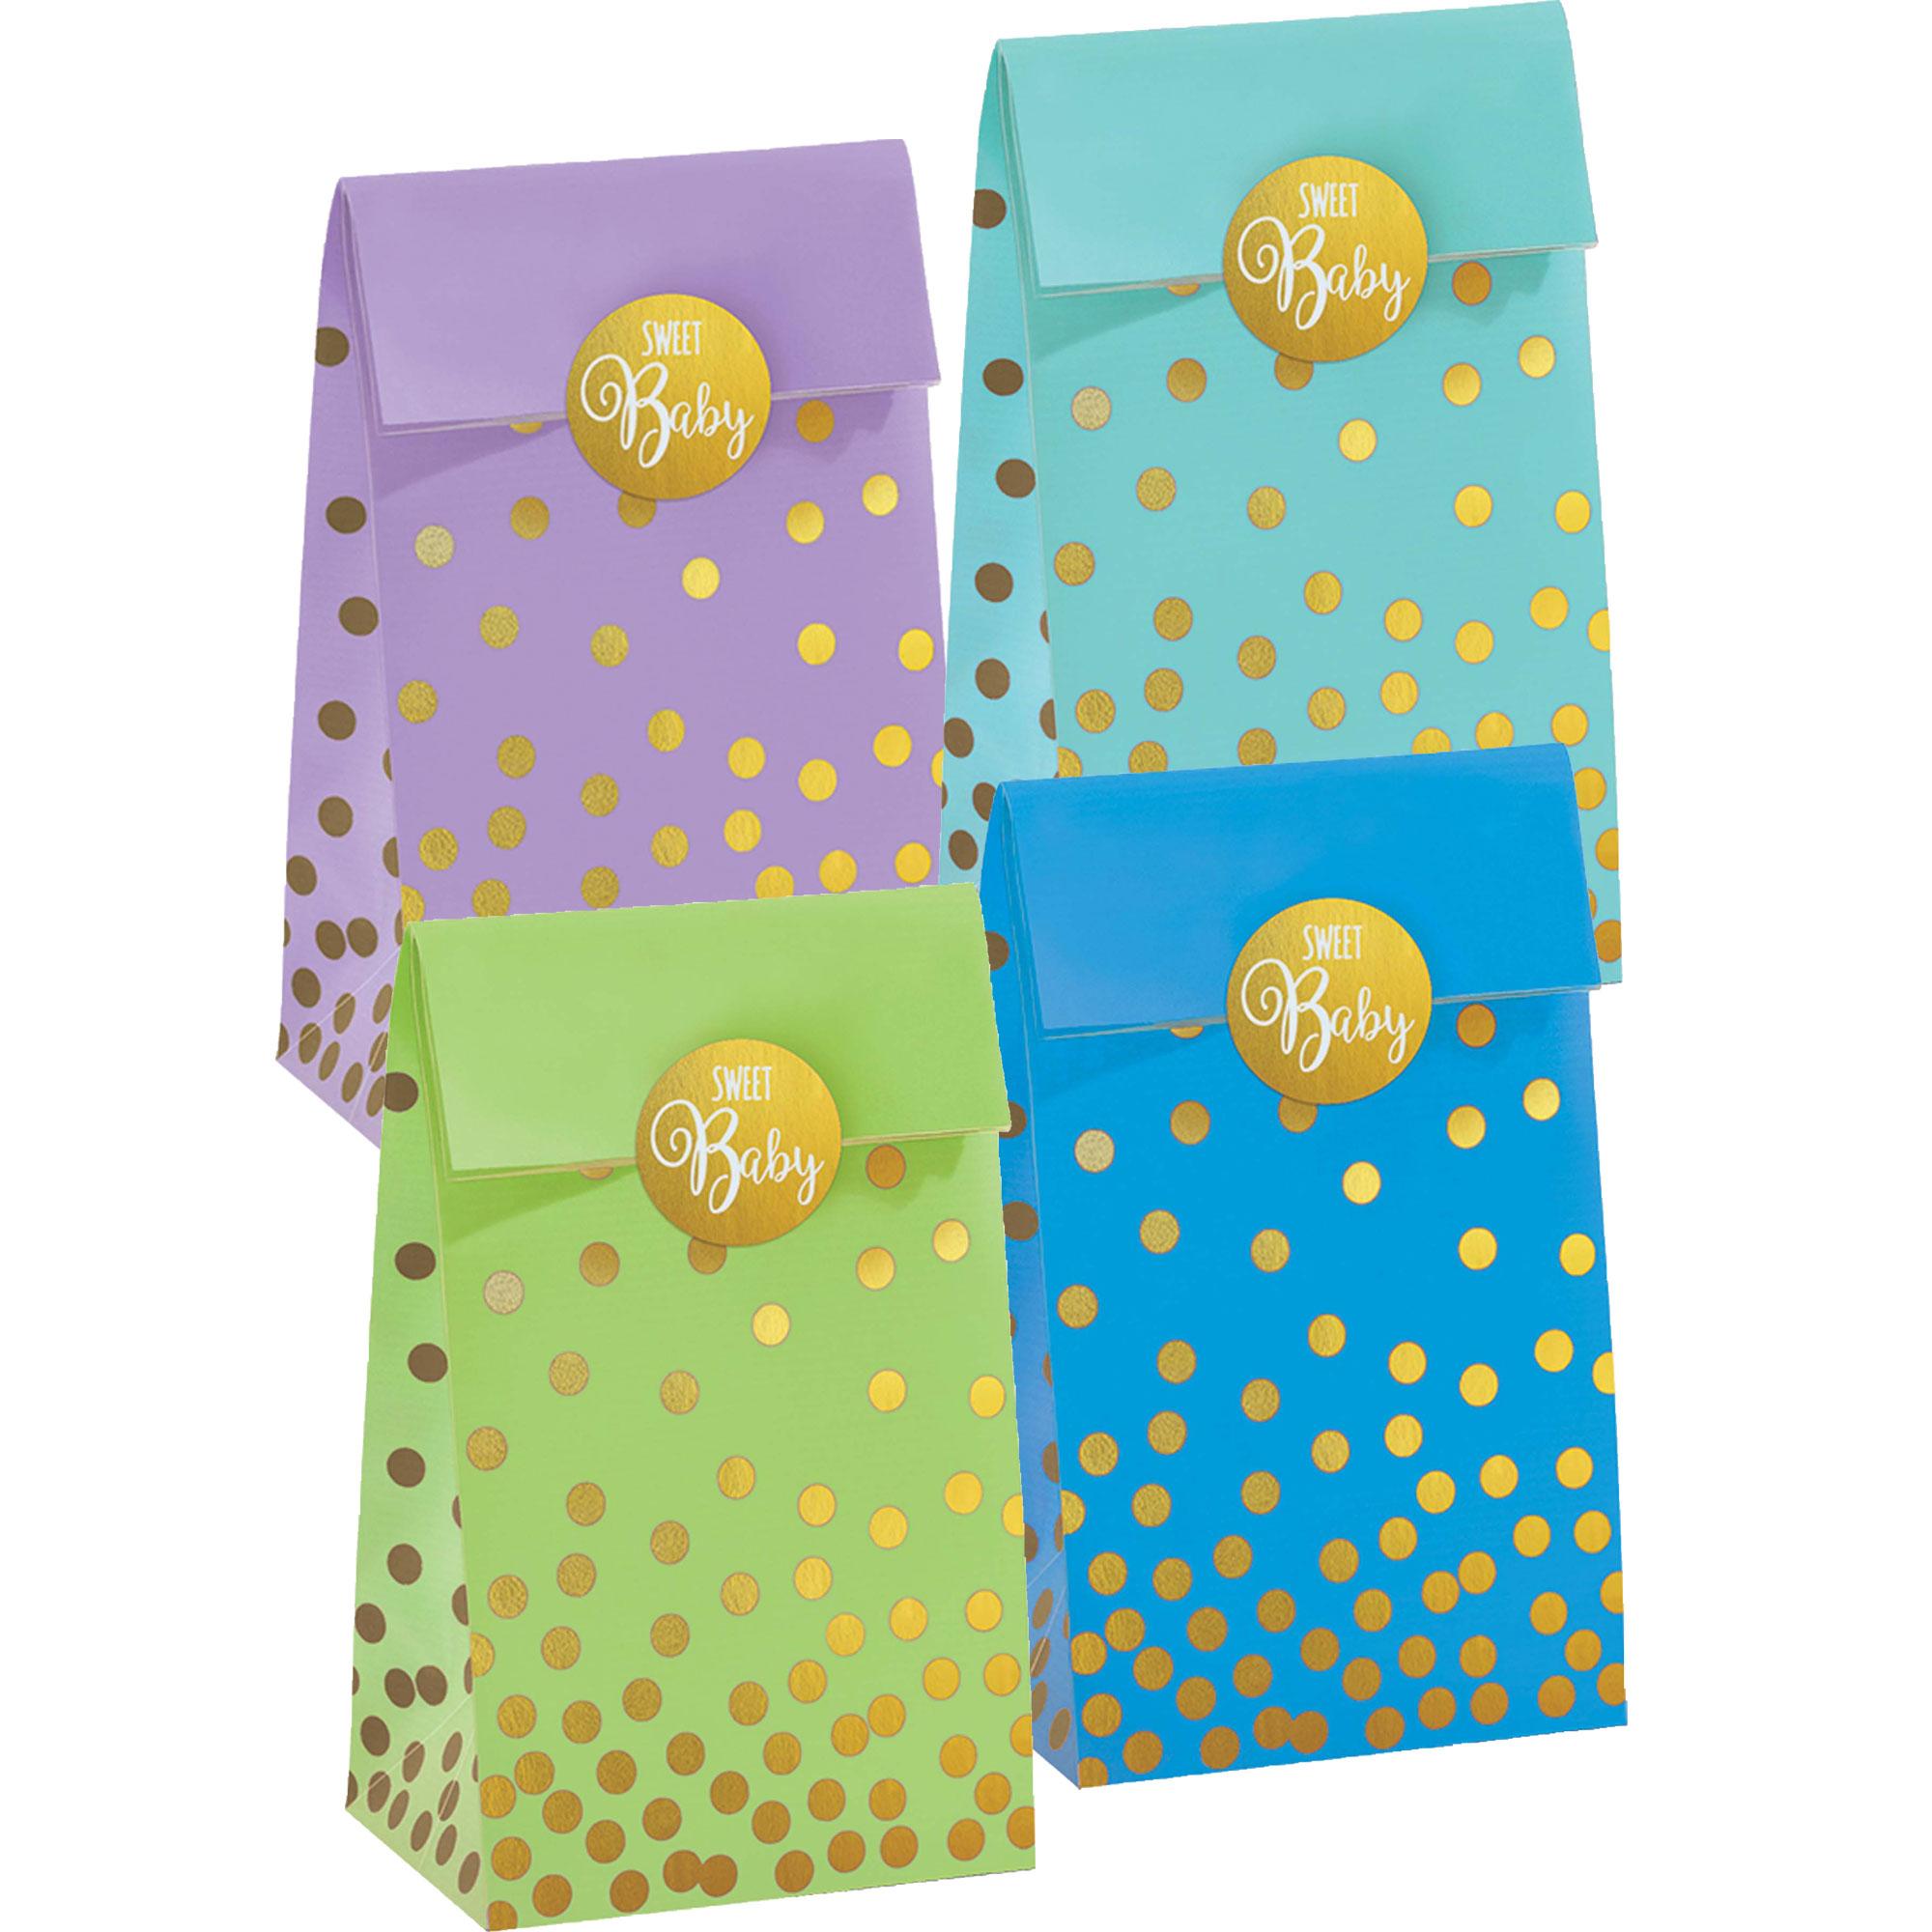 Neutral Baby Shower Foil Stamped Paper Bags 20pcs Party Favors - Party Centre